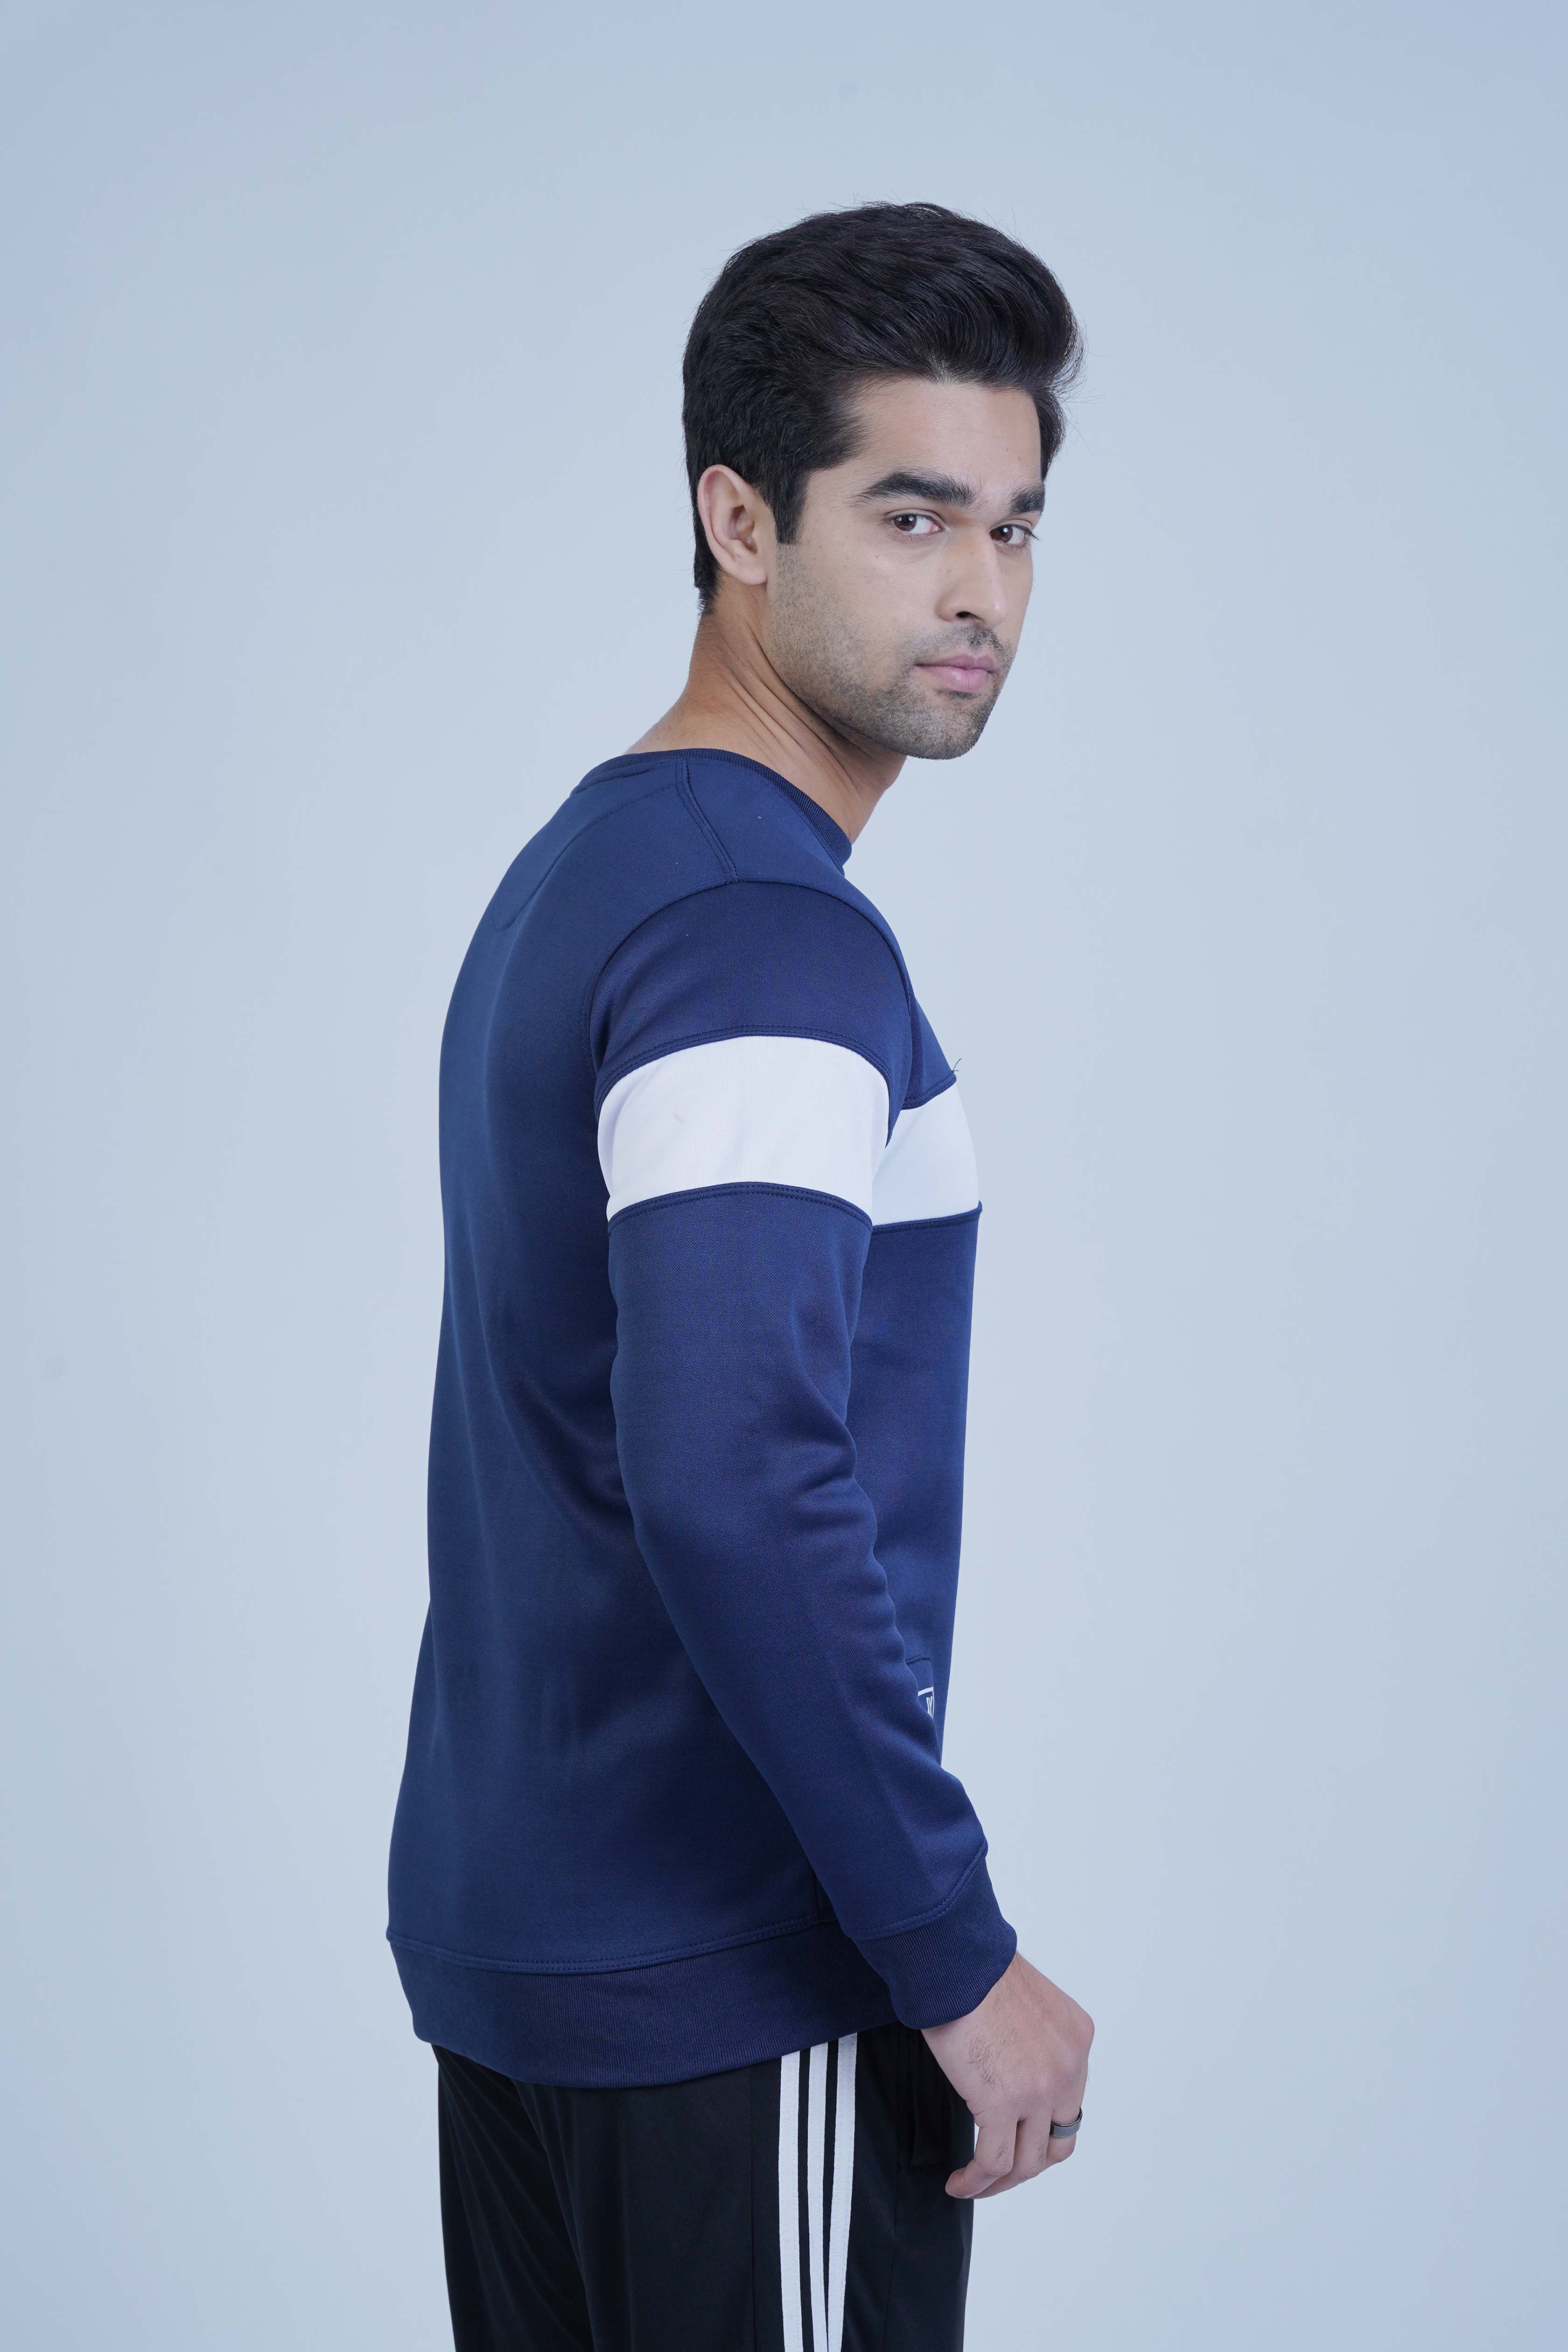 Premium Quality: Urban Stripe Navy Blue Sweatshirt by The Xea